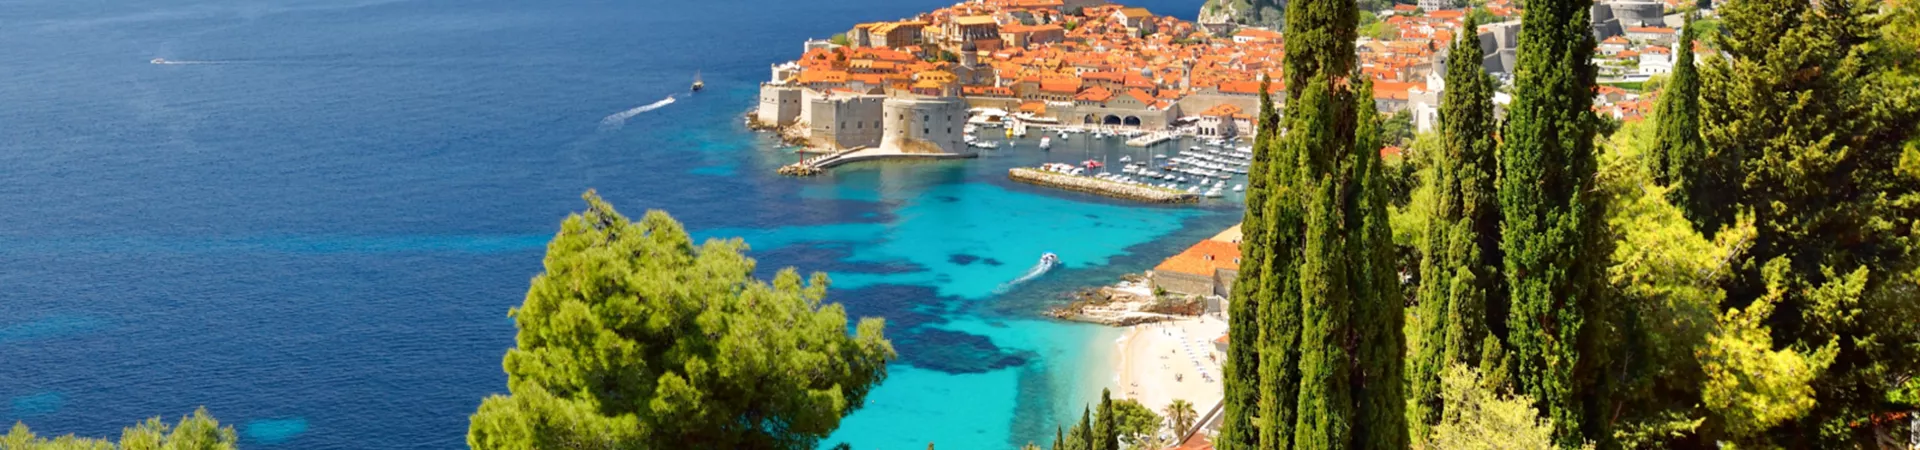 Dubrovnik and its coastline, Croatia